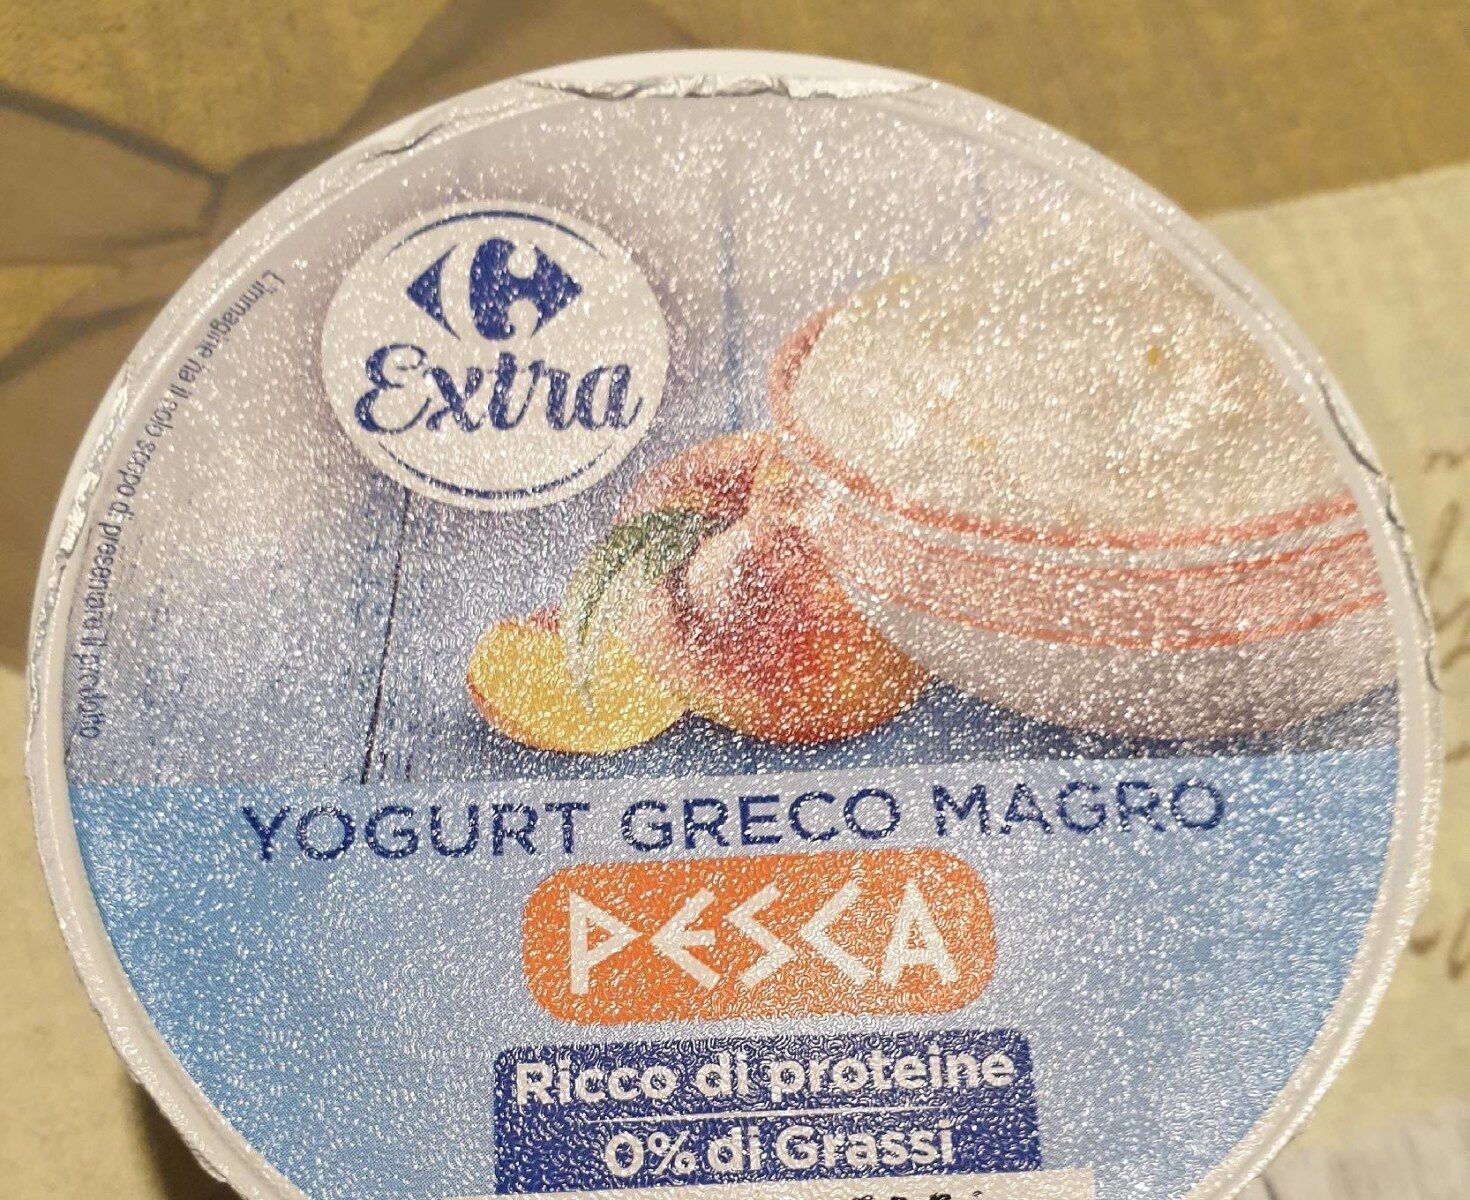 Yogurt greco magro pesca - Product - it